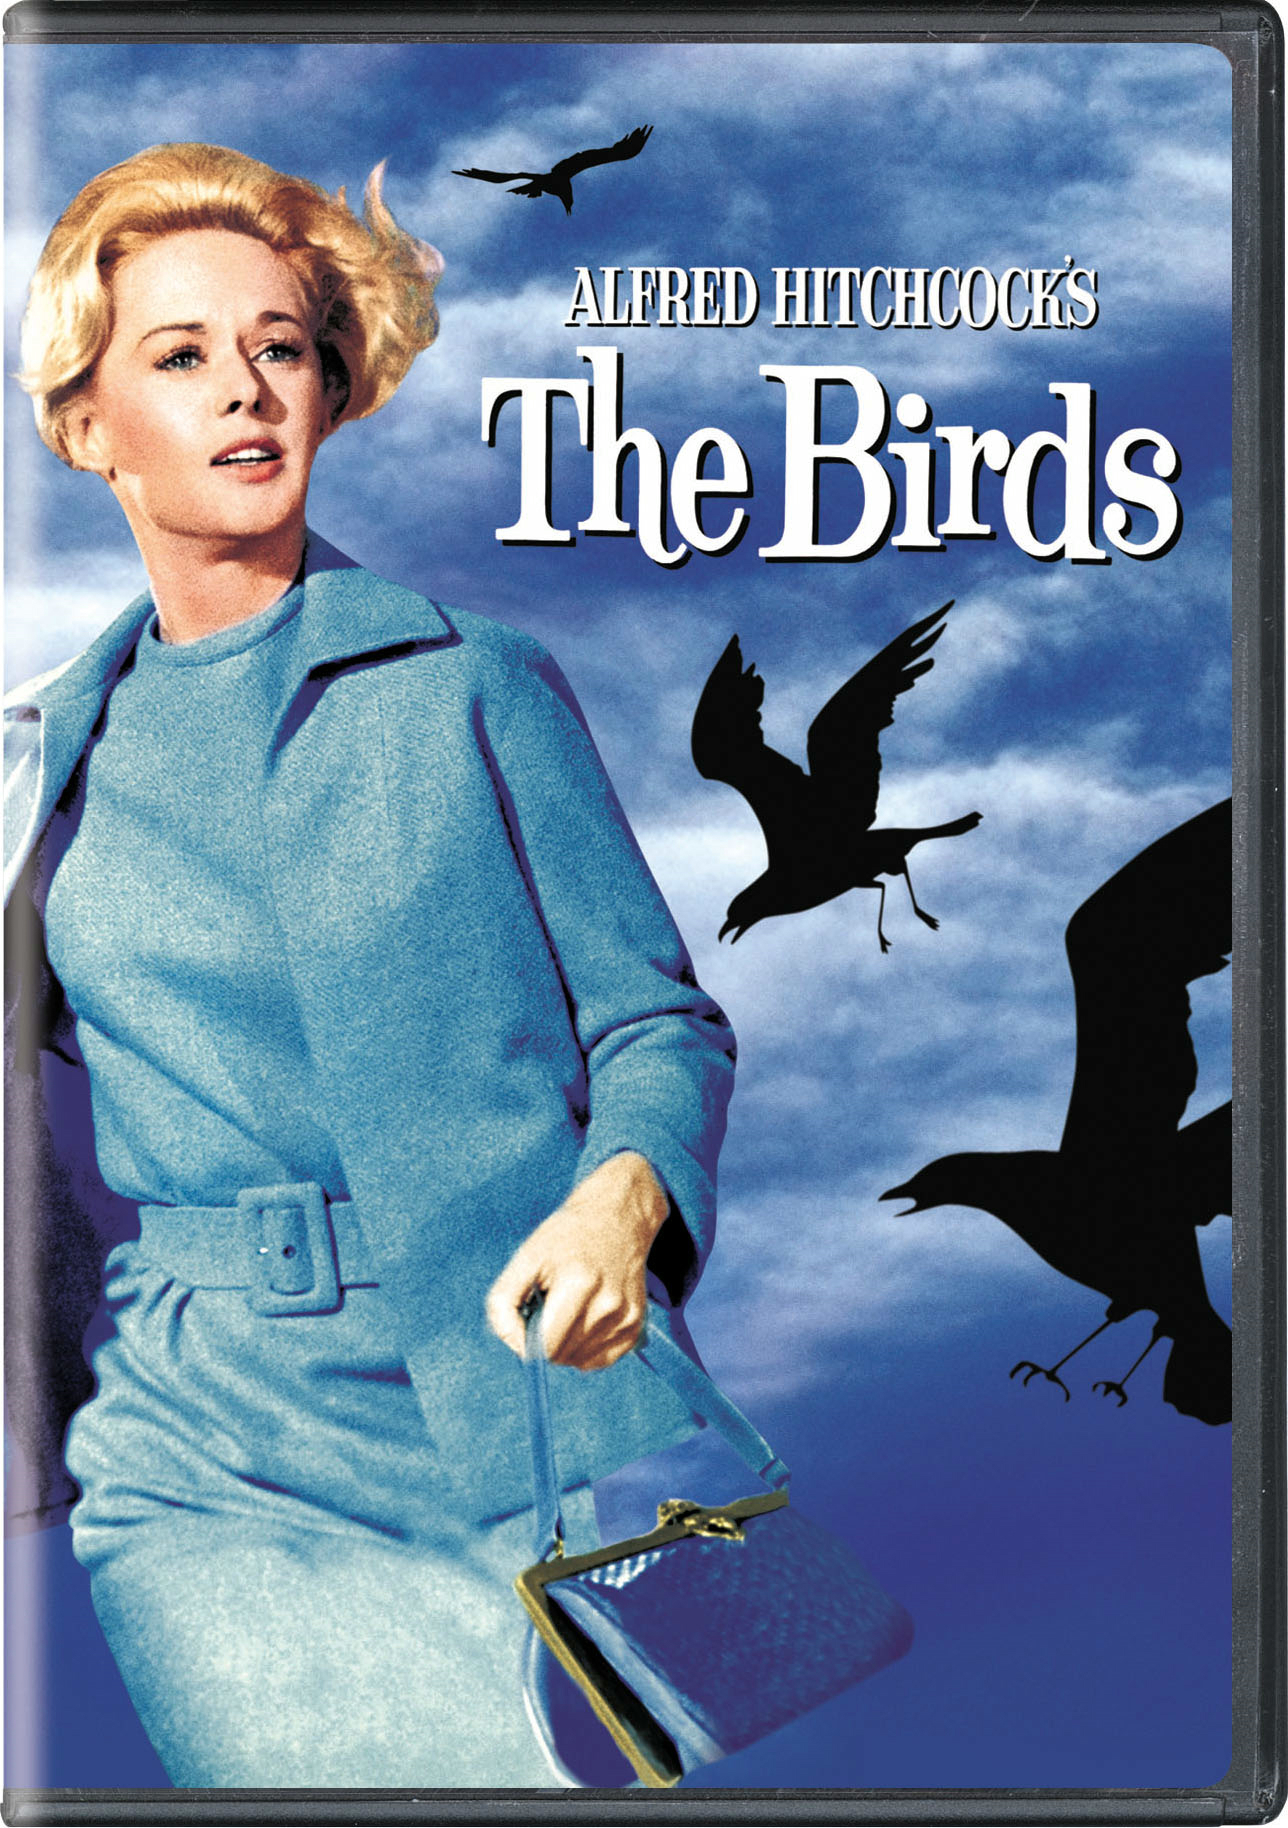 The Birds (DVD + Digital Copy) - DVD [ 1963 ]  - Modern Classic Movies On DVD - Movies On GRUV